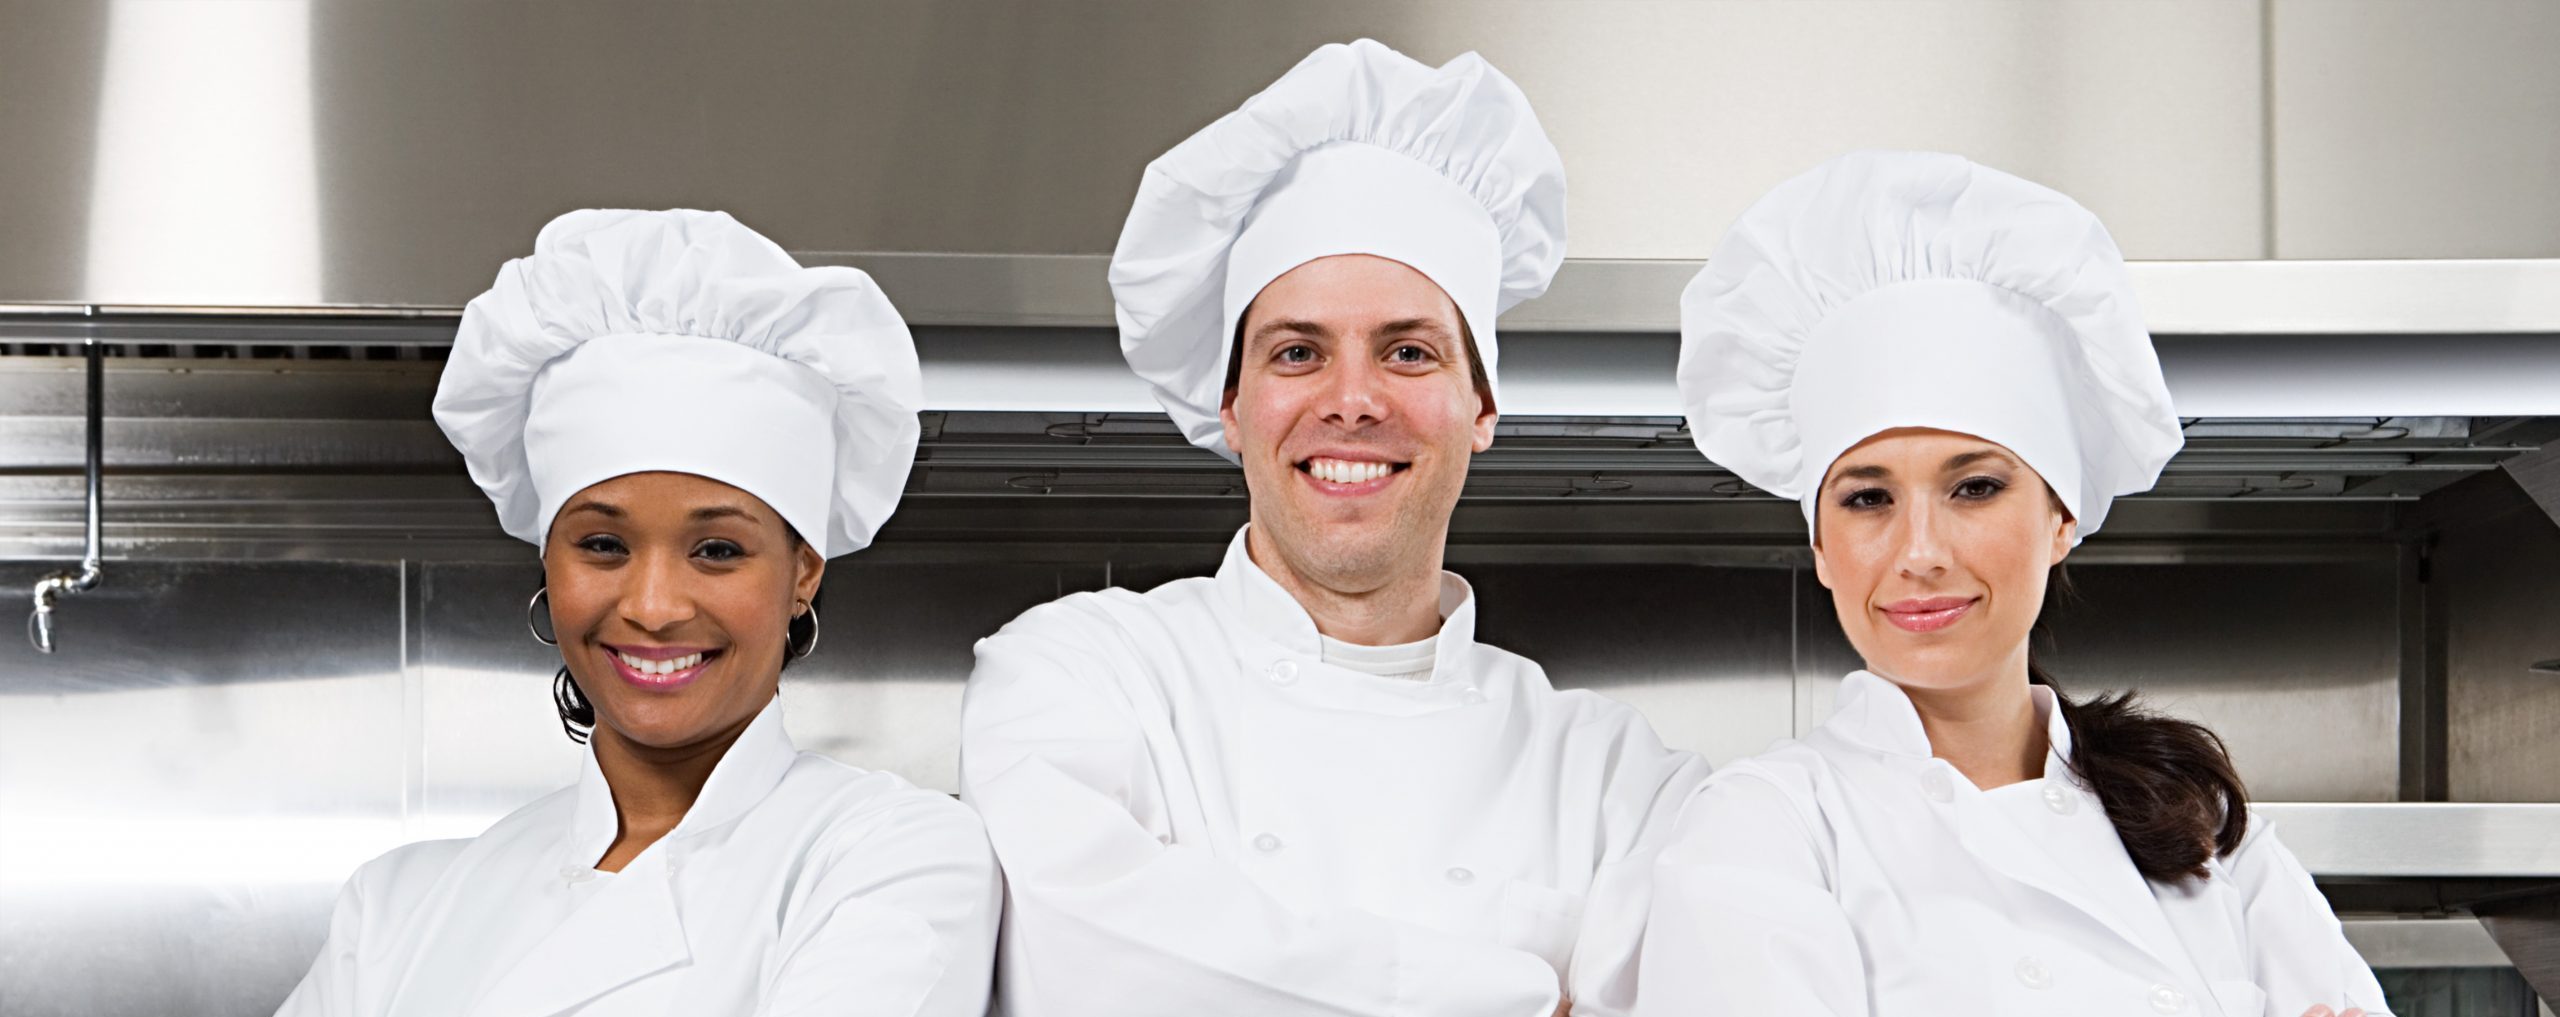 Three chefs smiling